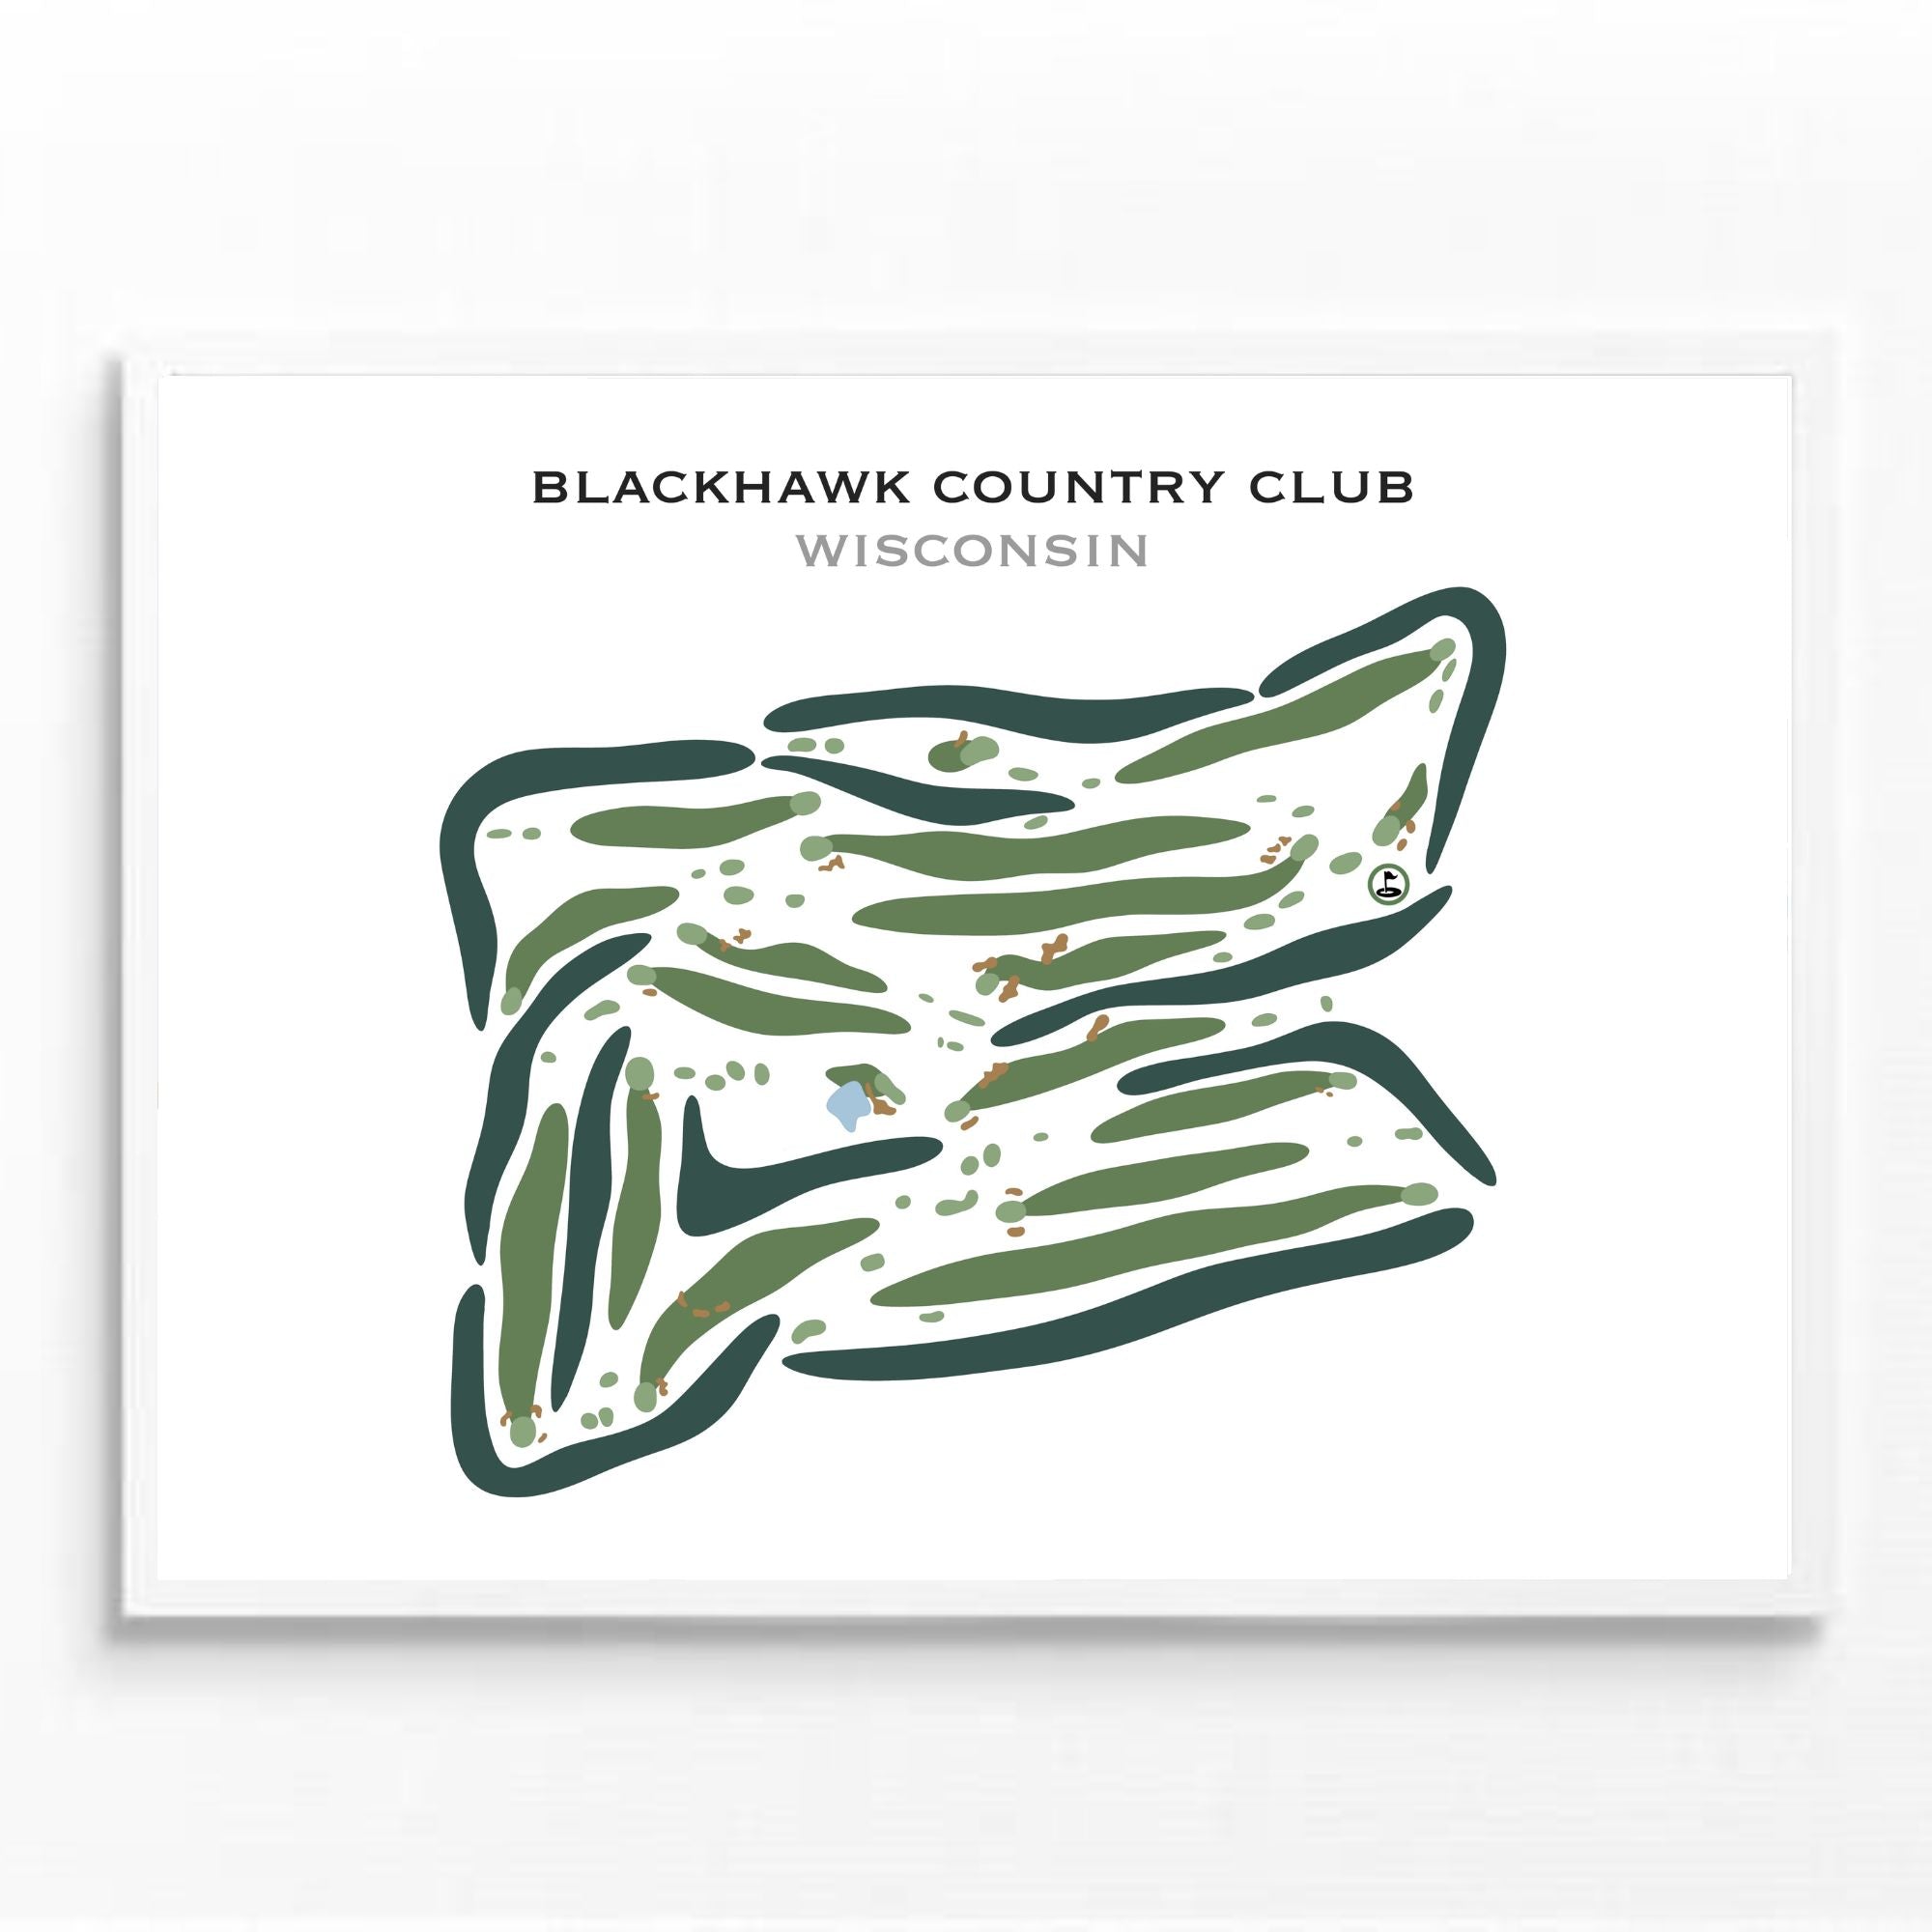 Blackhawk Country Club - Reviews & Course Info